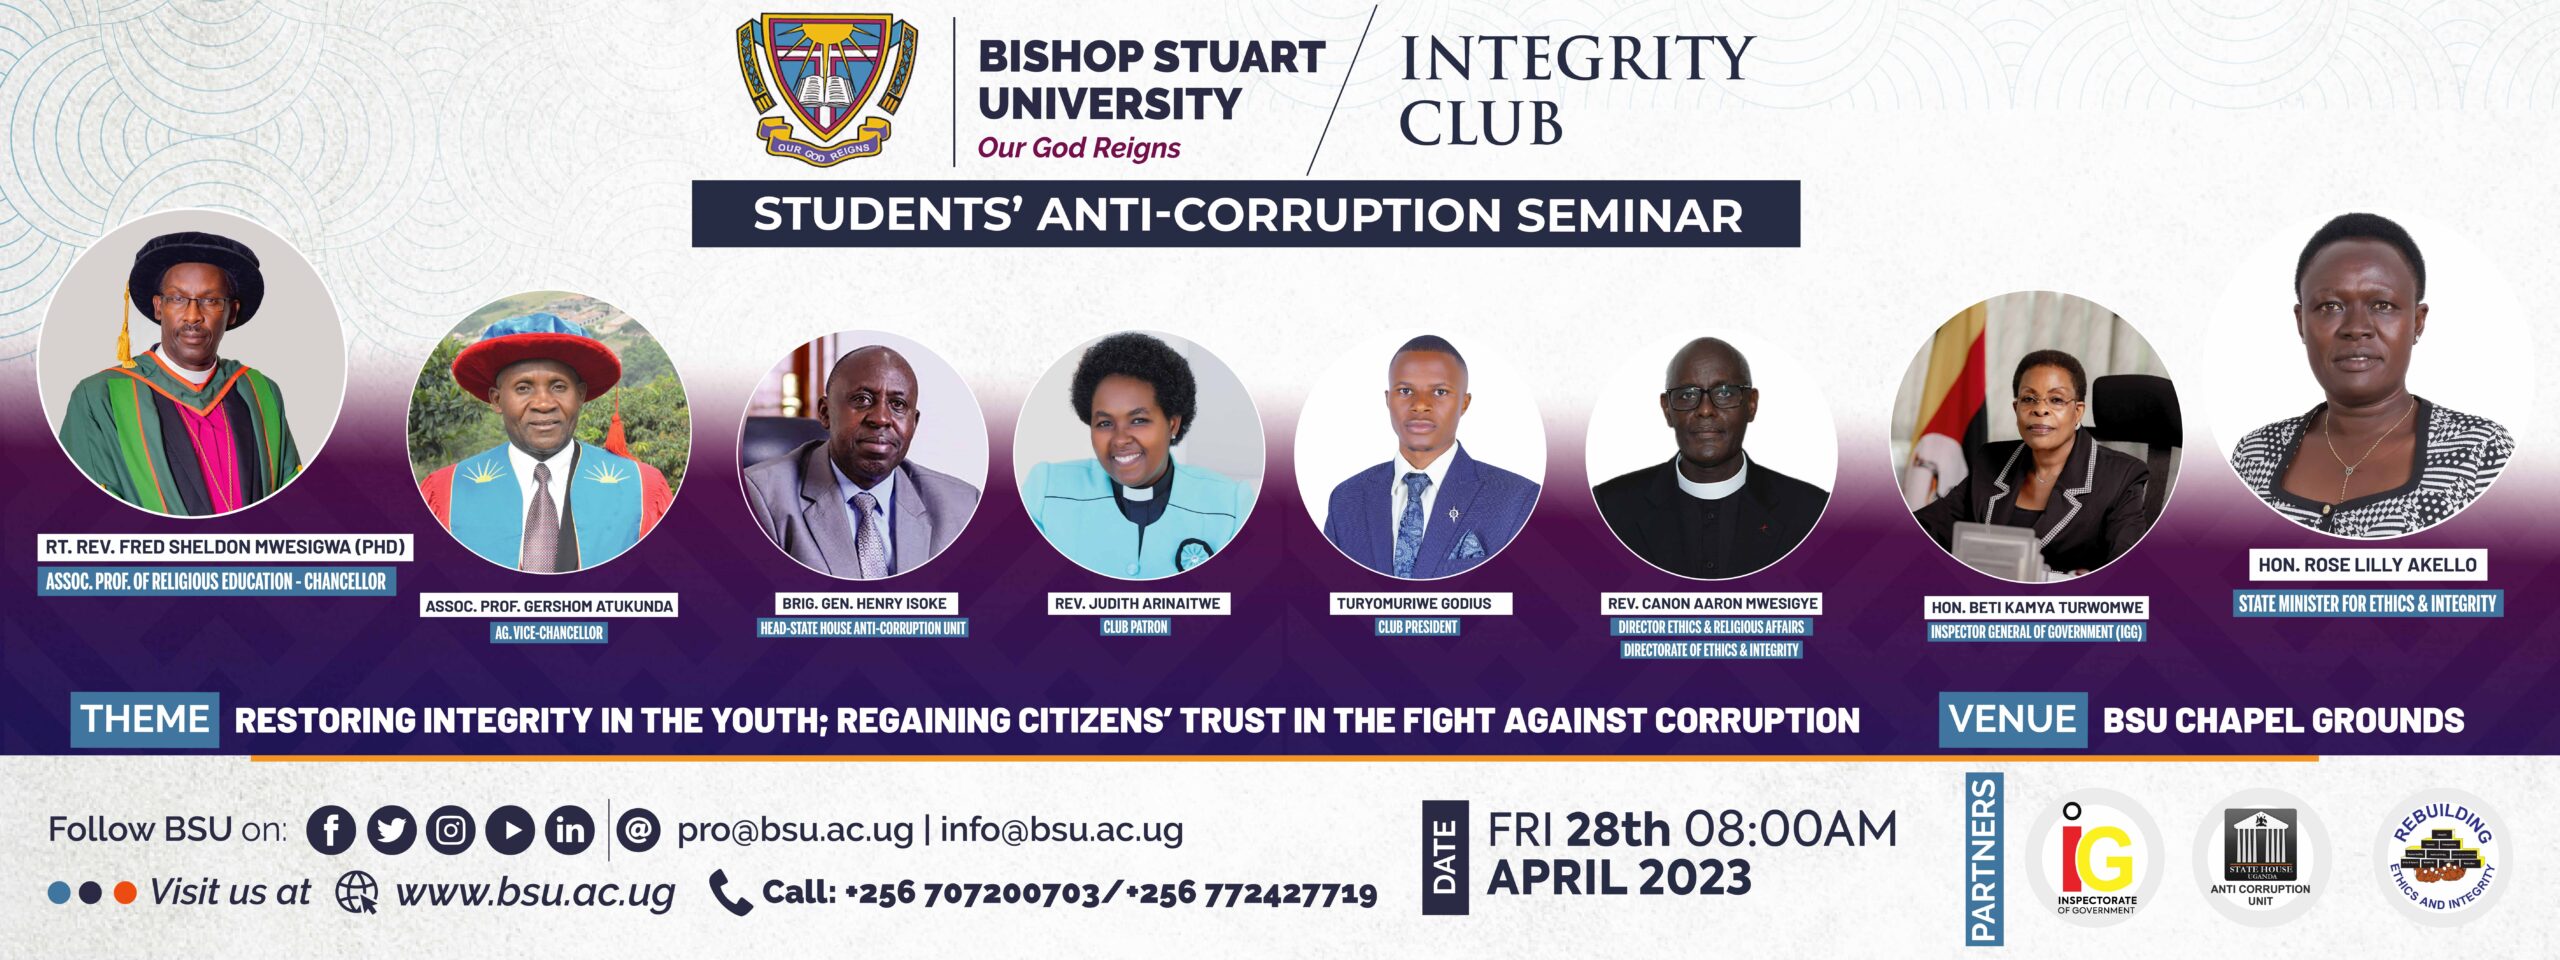 Students’ Anti-Corruption Seminar